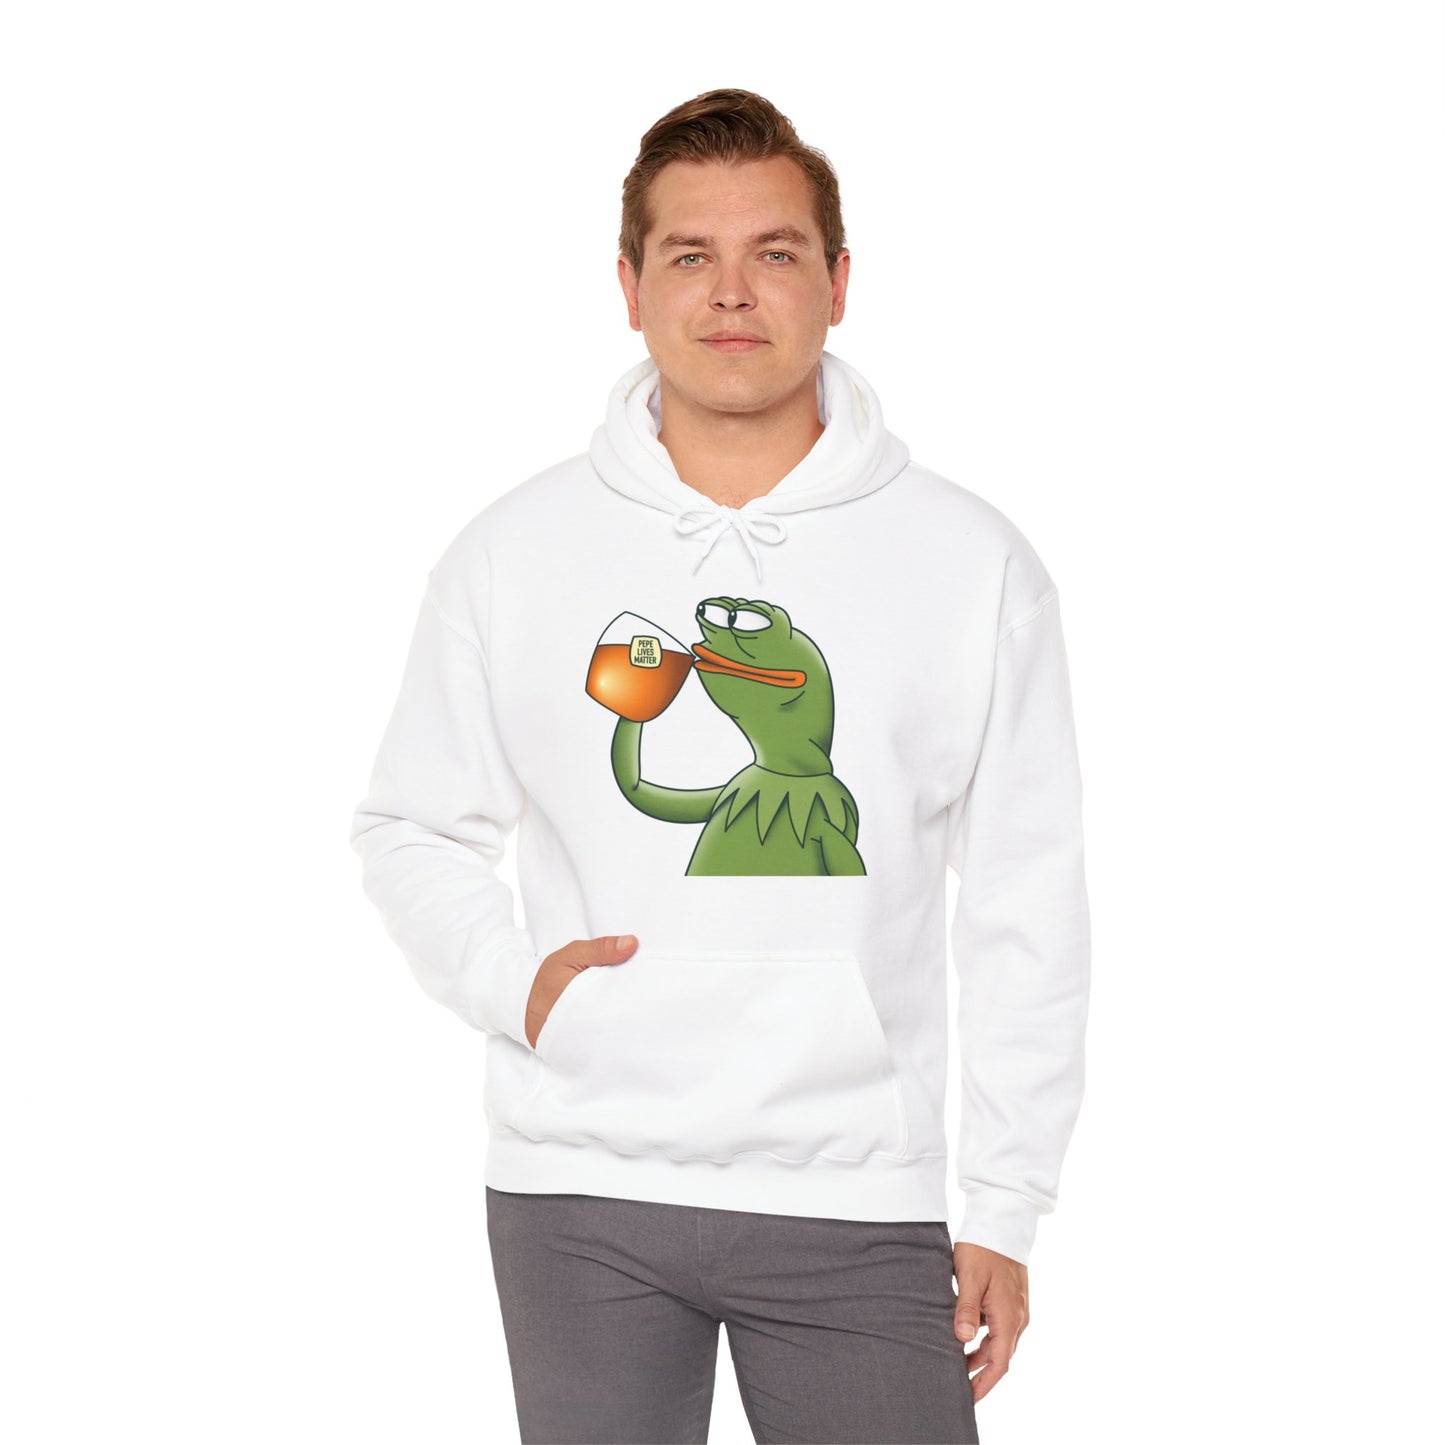 Pepe Lives Matter Sweatshirt